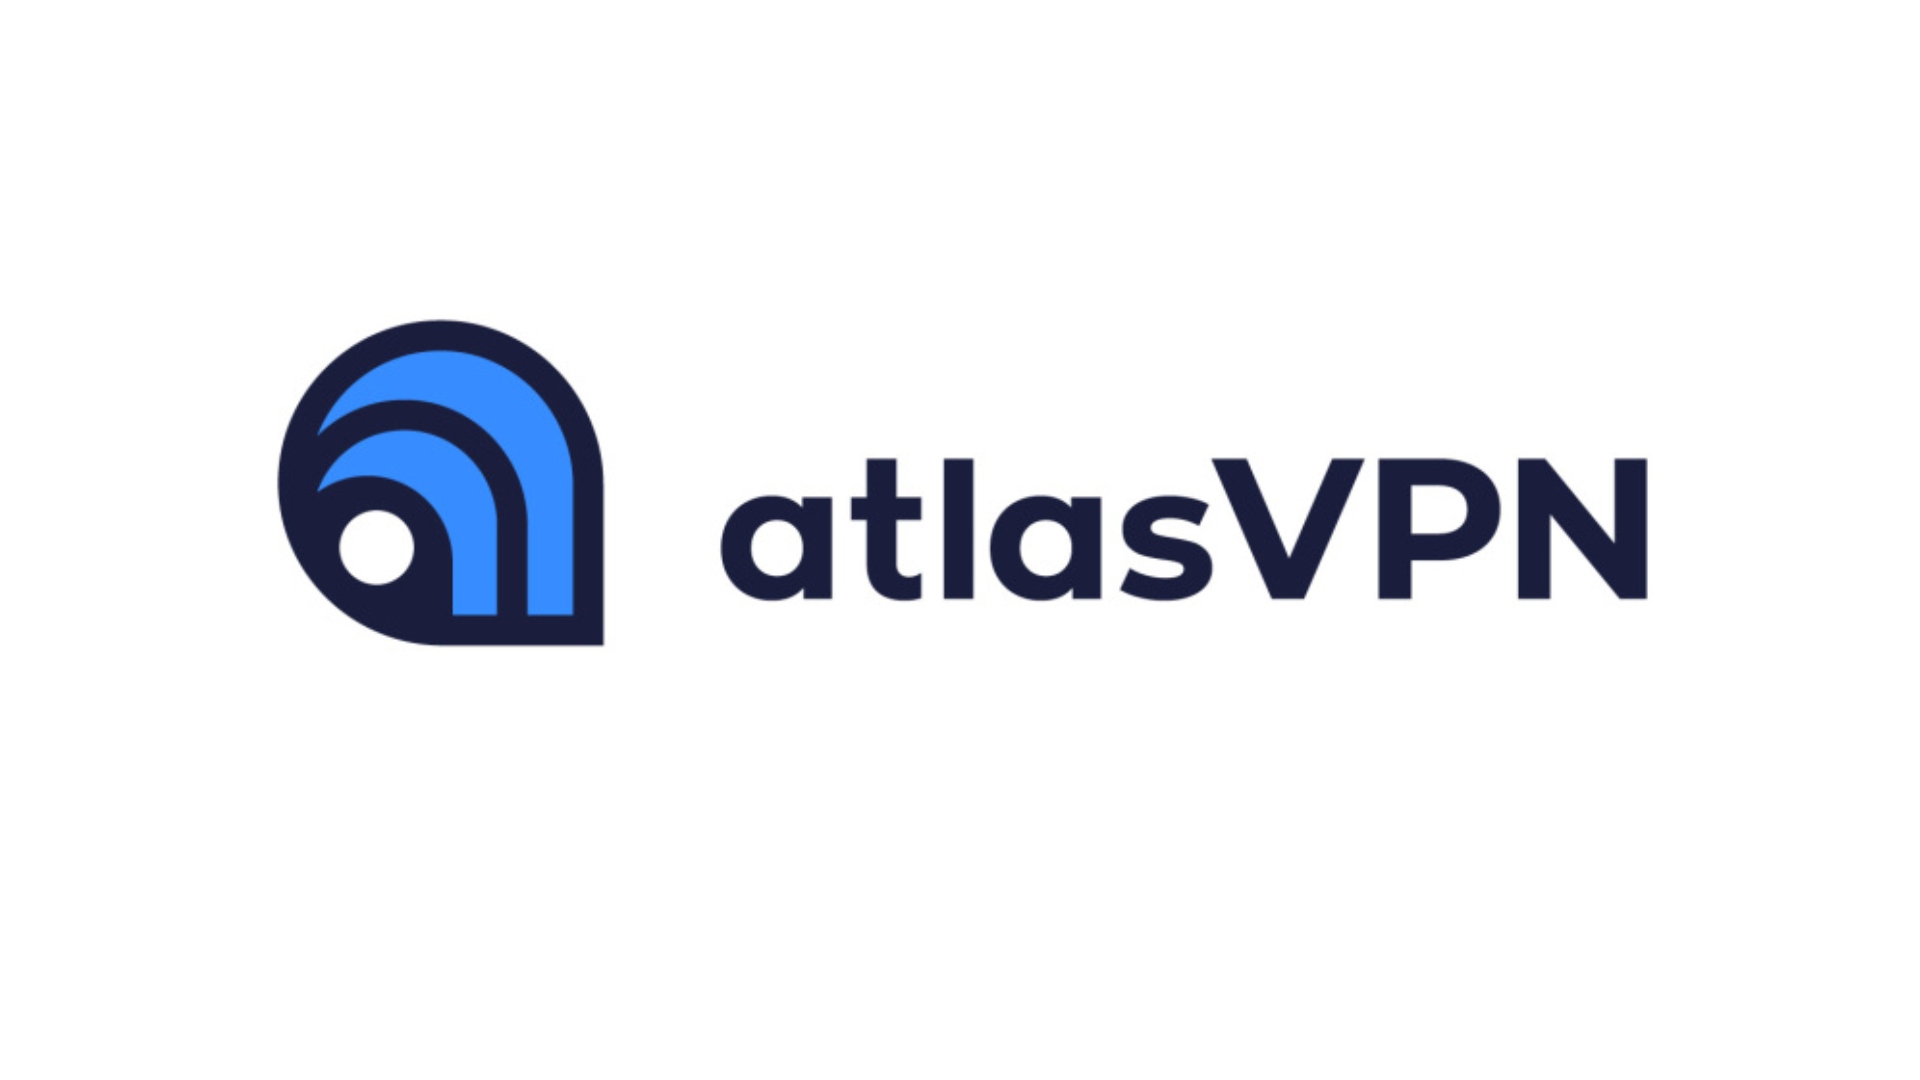 Best Linux VPN: AtlasVPN. Image shows the company logo.